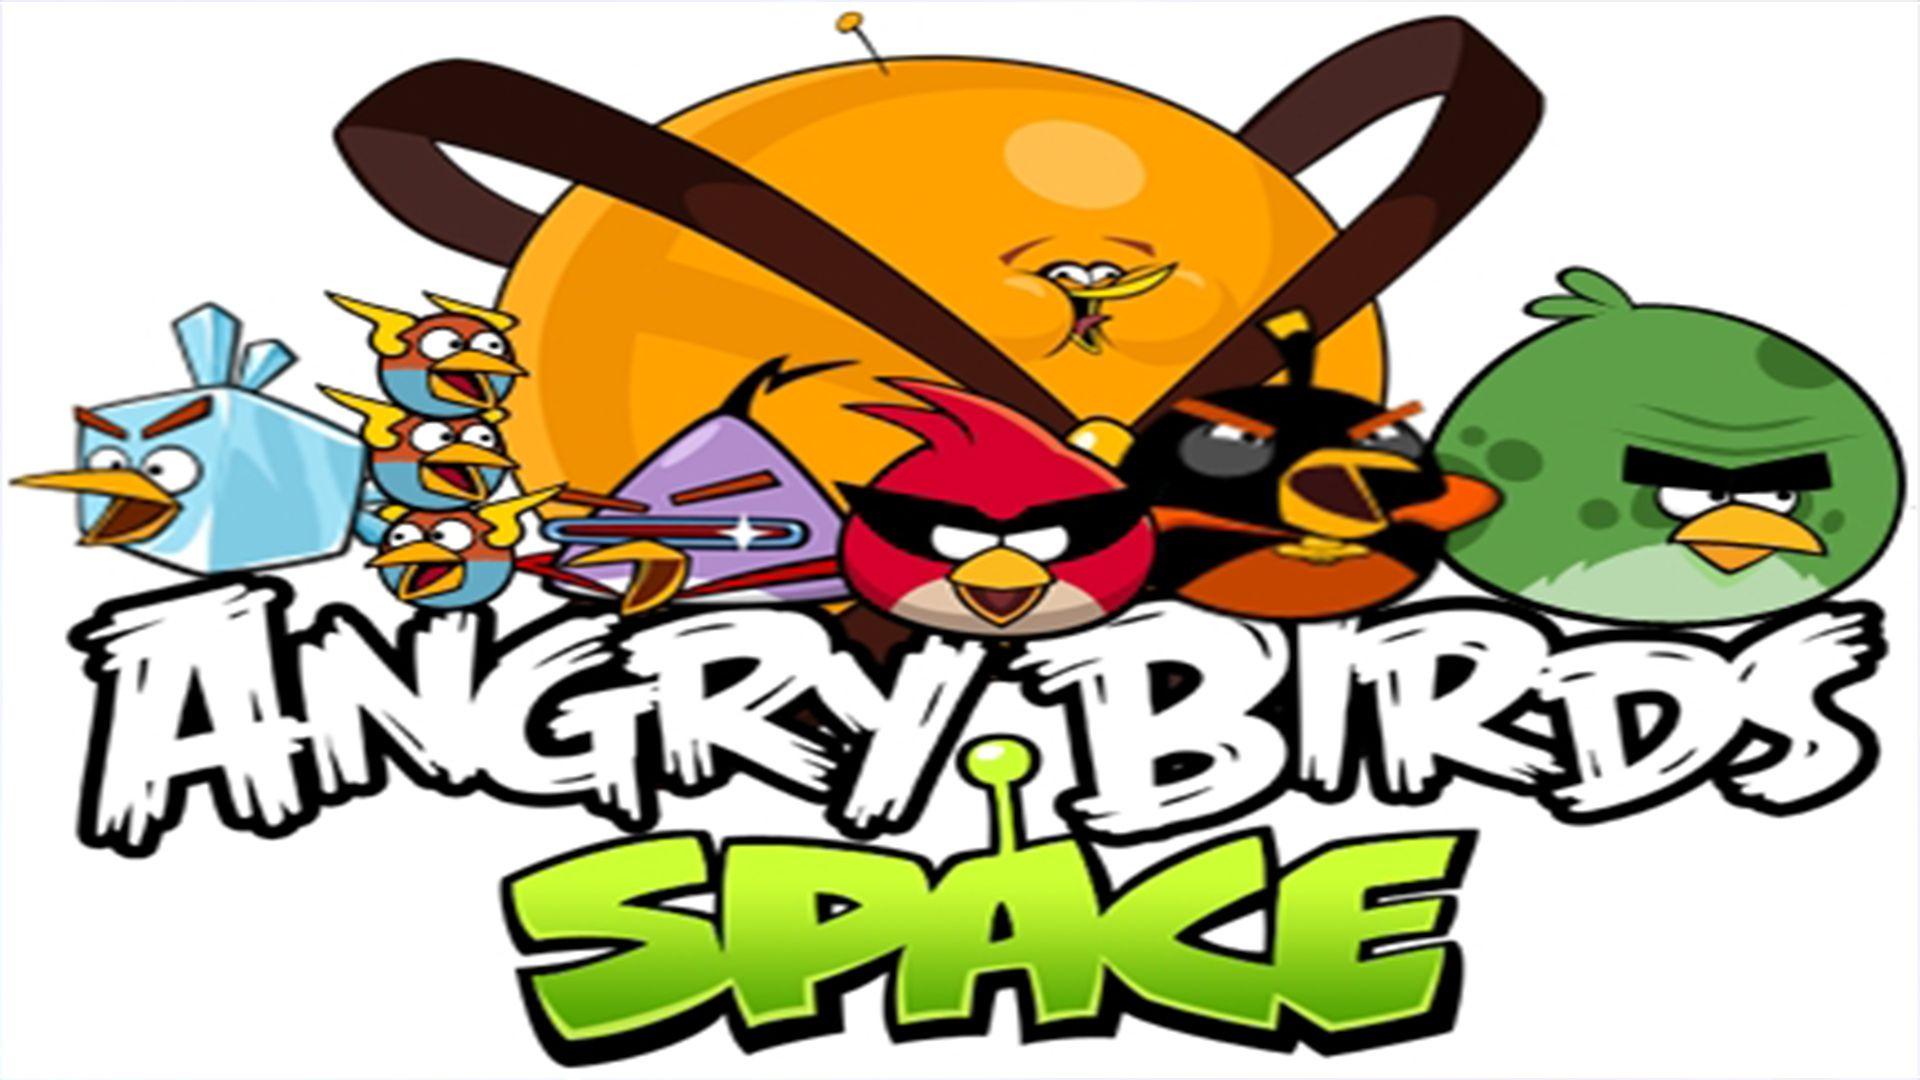 angry birds space hd mod apk